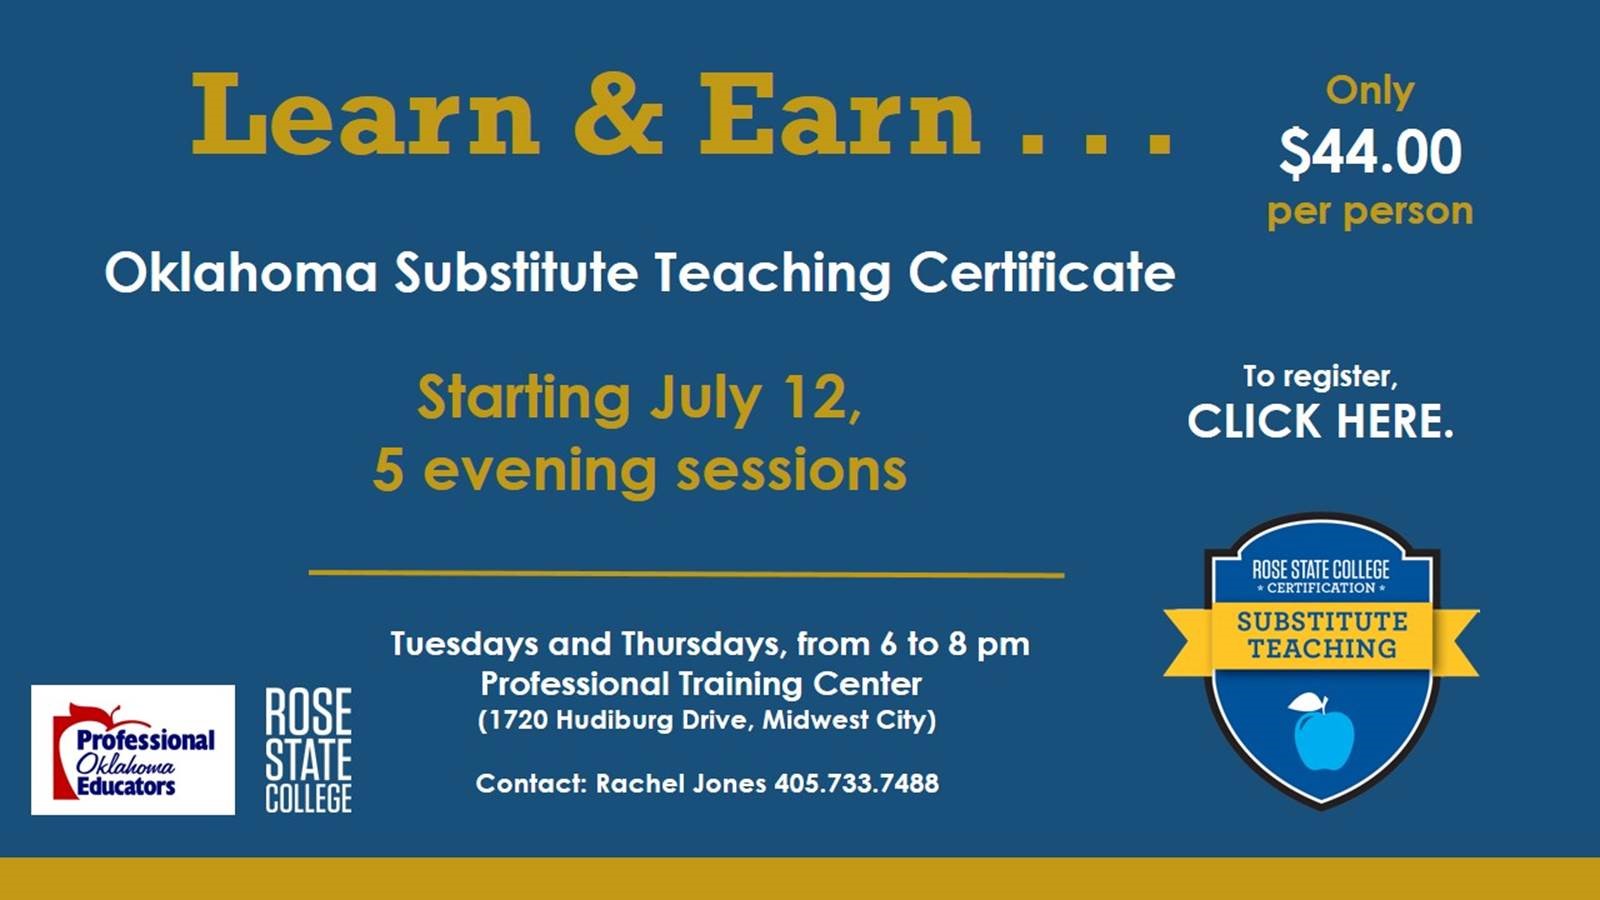 Learn & Earn Oklahoma Substitute Teaching Certificate